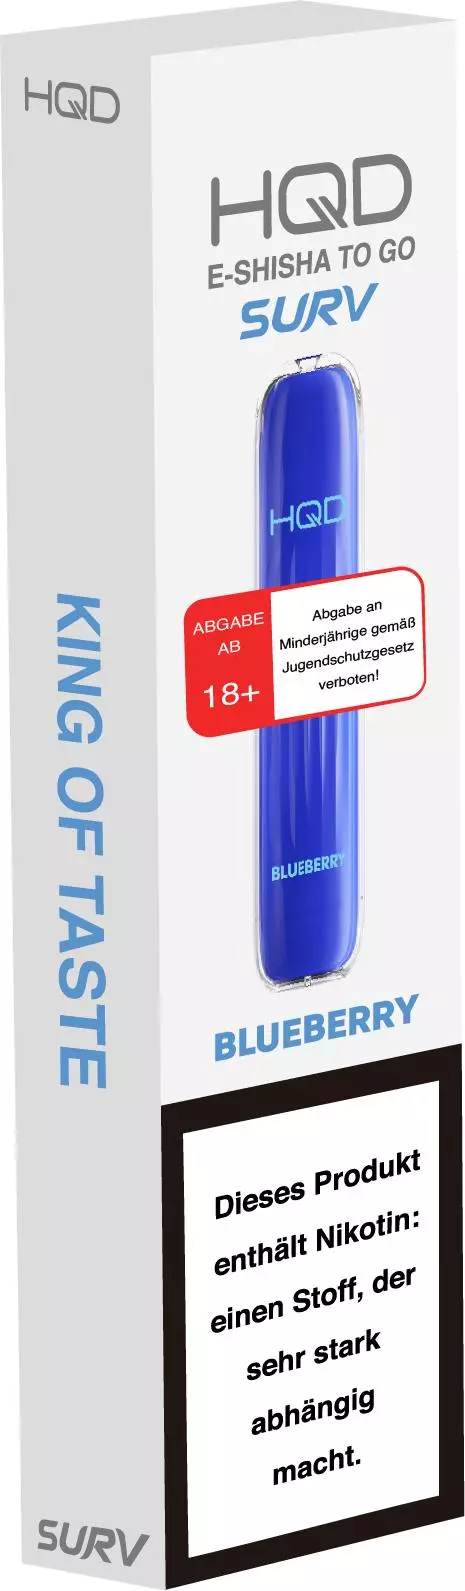 HQD SURV Blueberry E-Shisha Einweg 18mg/ml Nikotin